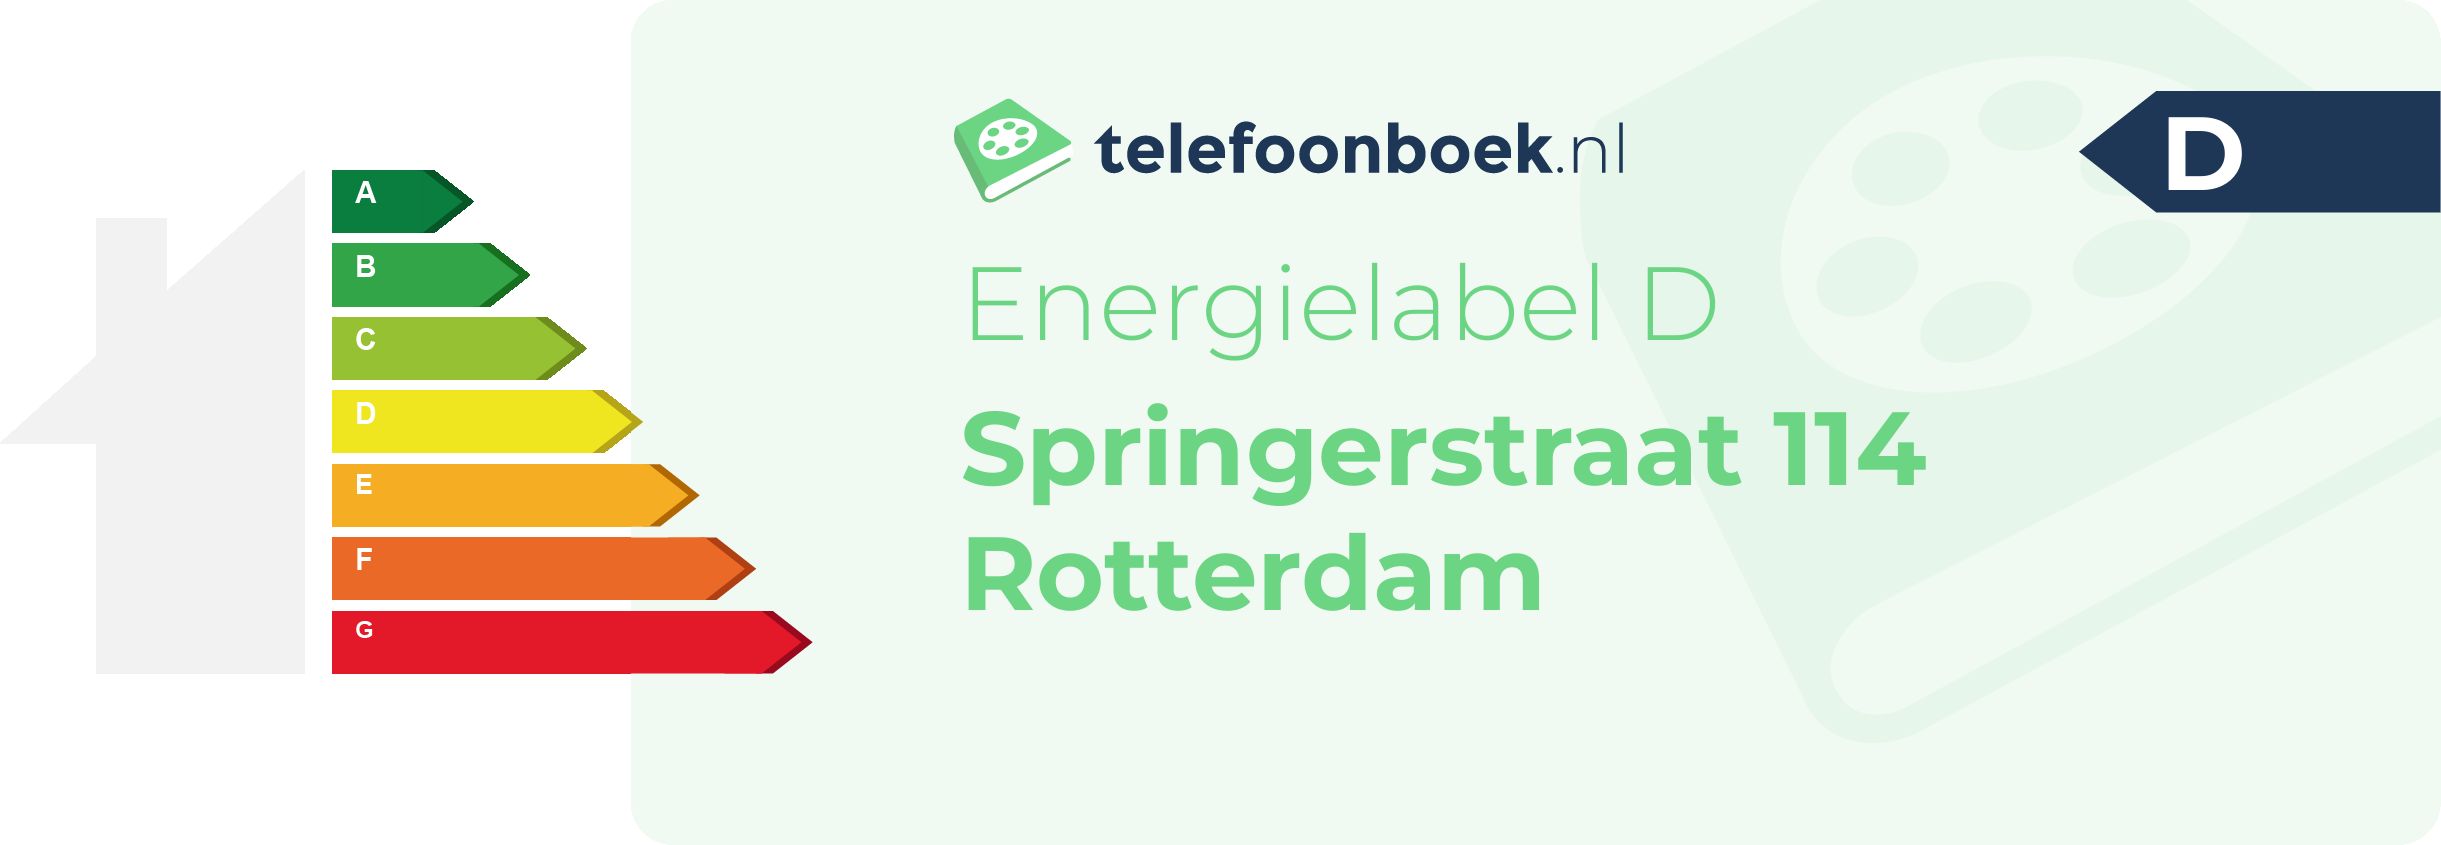 Energielabel Springerstraat 114 Rotterdam